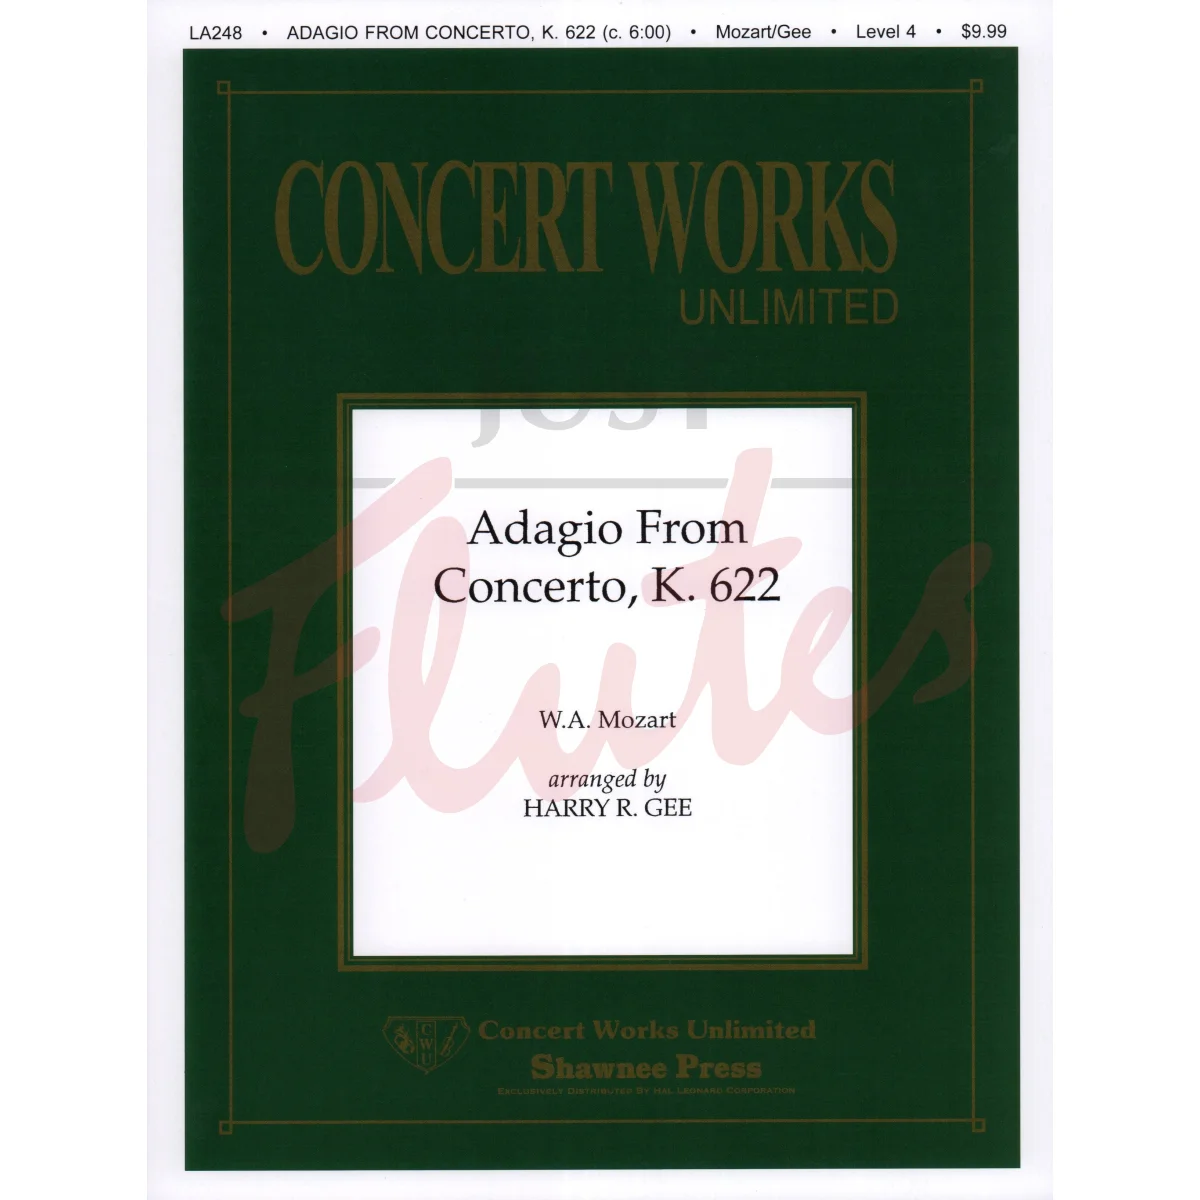 Adagio from Concerto K.622 for Clarinet